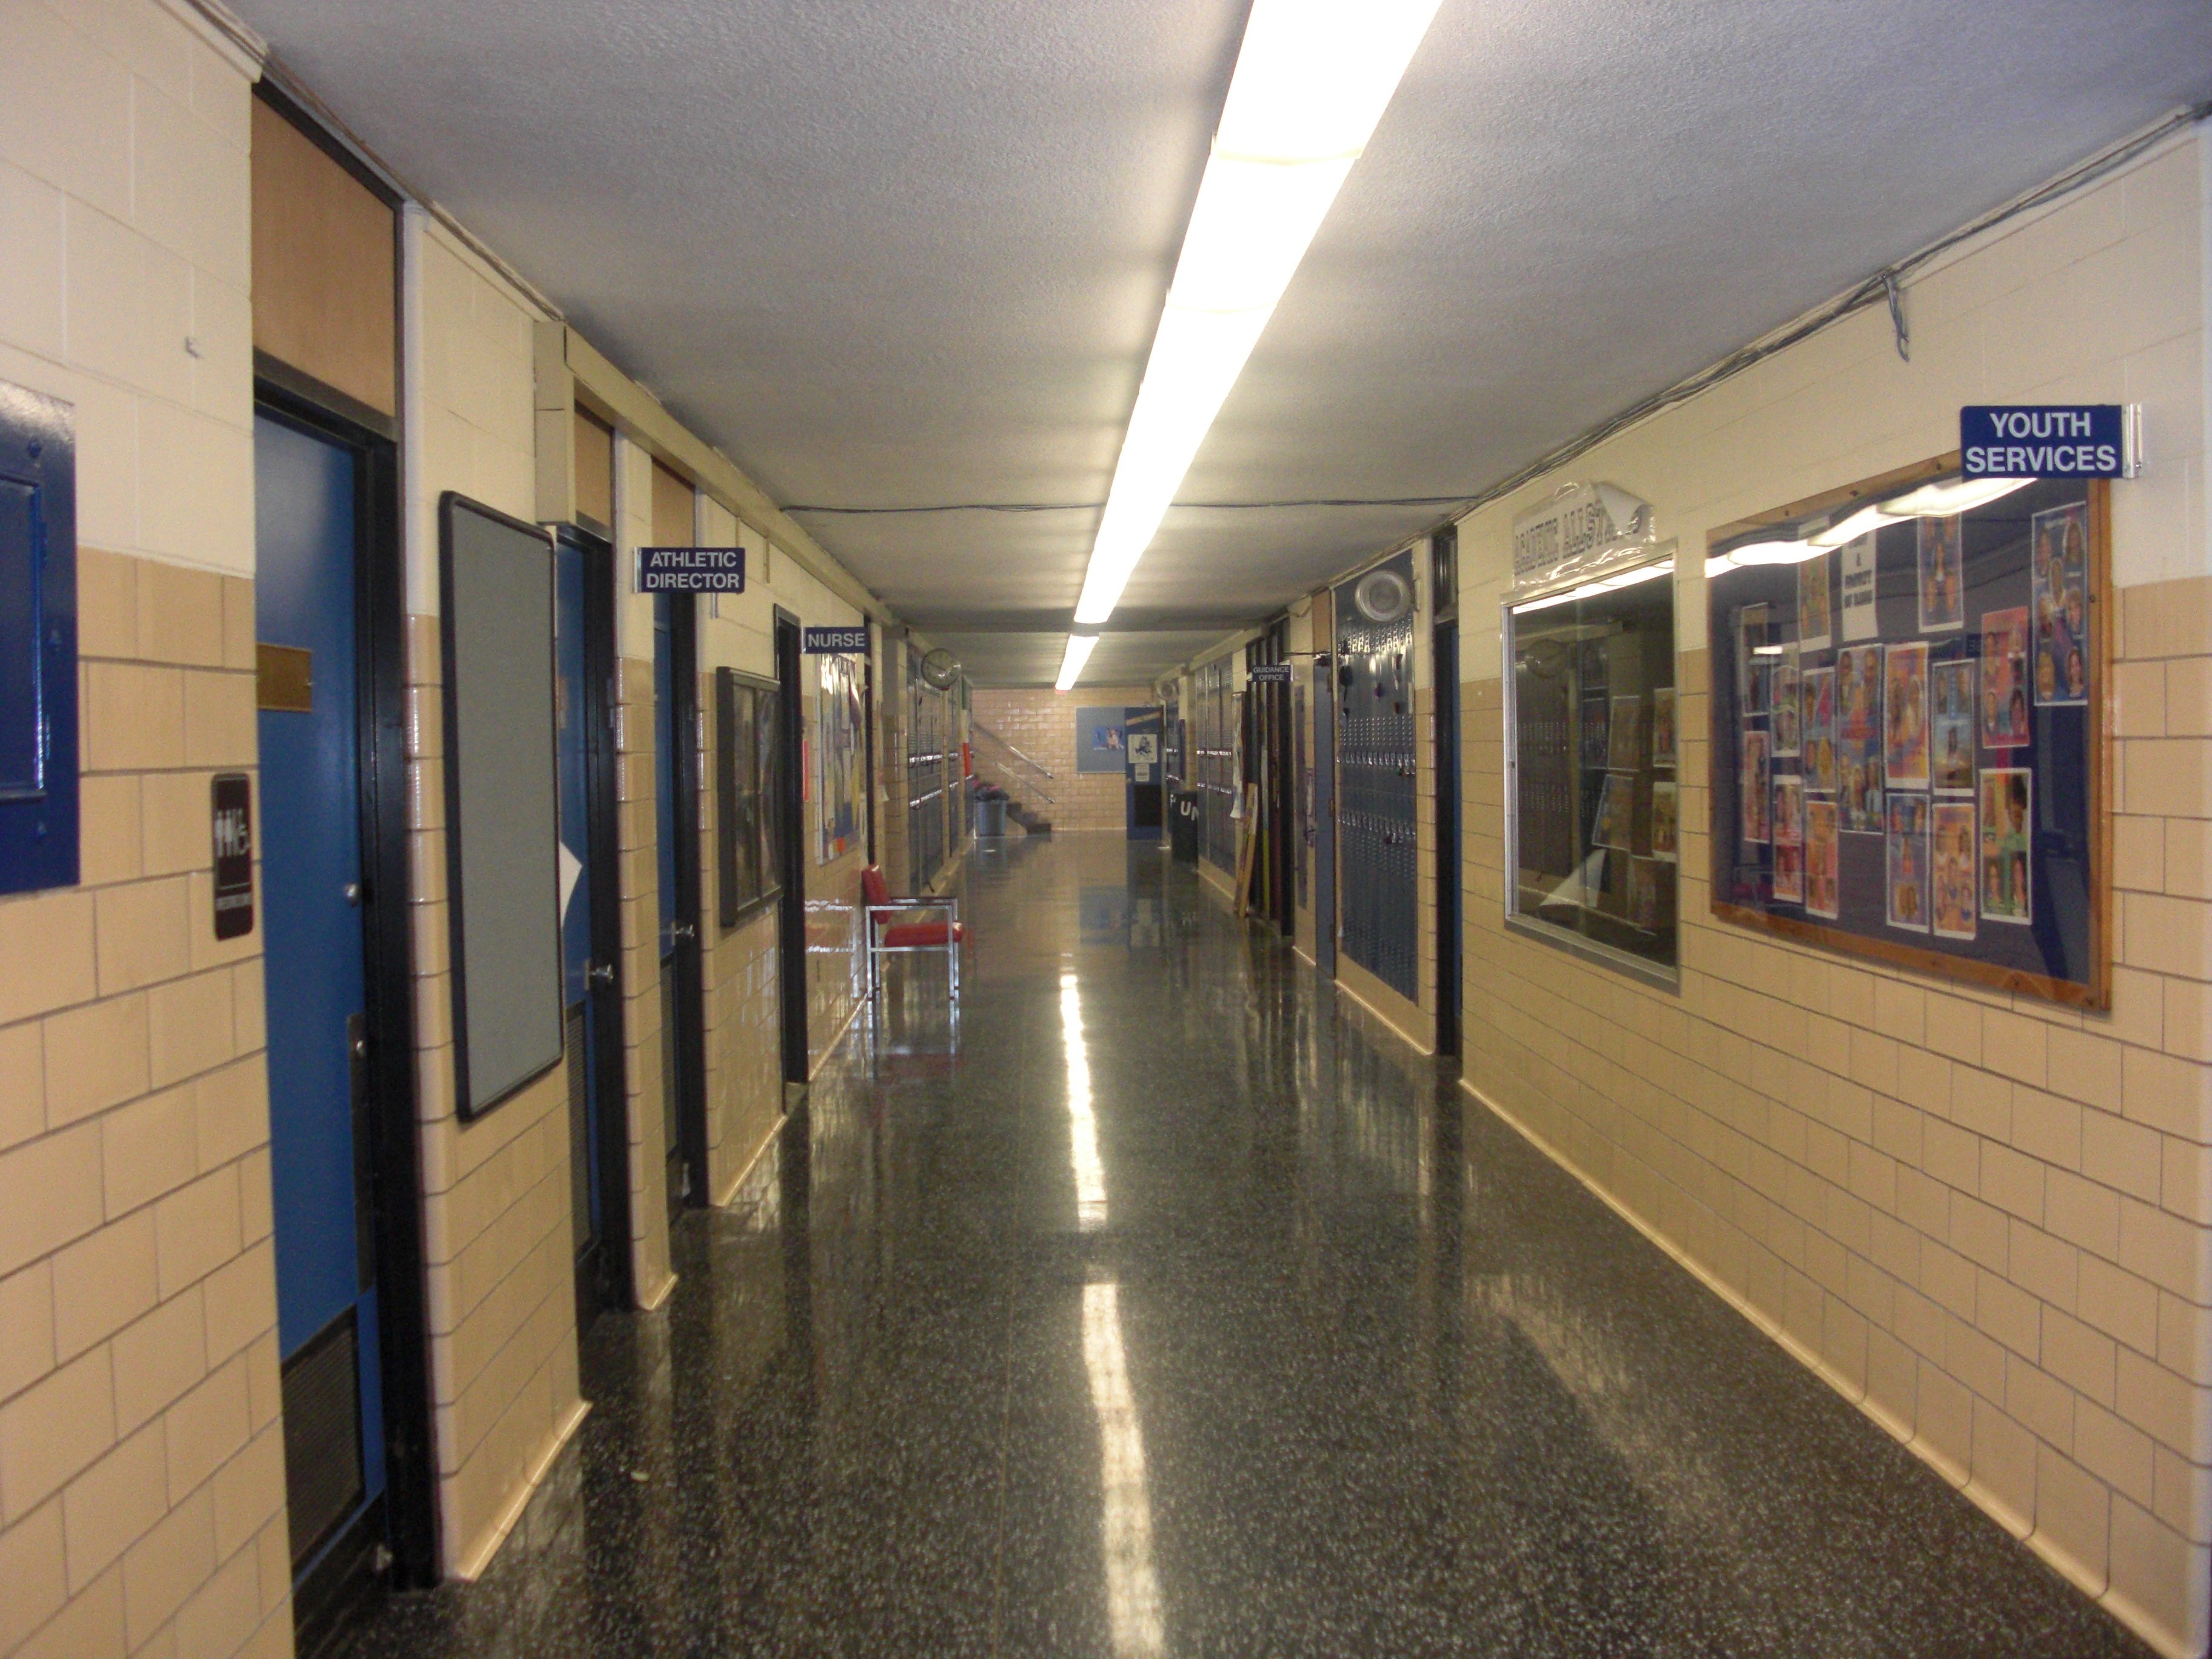 Pasillo de escuela vacío. | Imagen: Wikimedia Commons